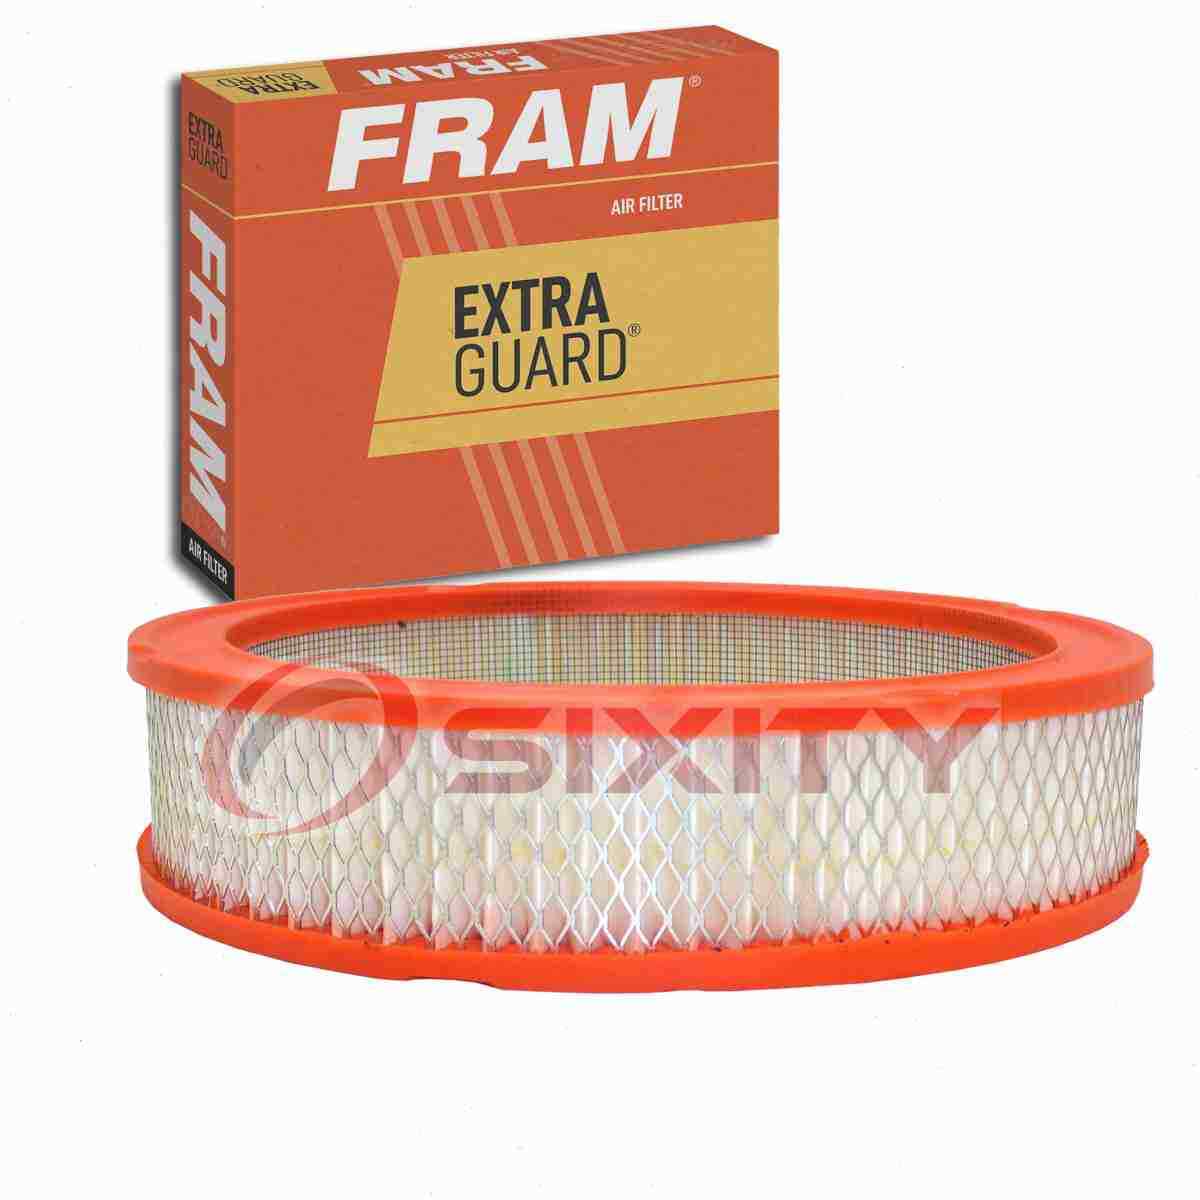 FRAM Extra Guard Air Filter for 1967-1970 American Motors Rebel Intake Inlet nu